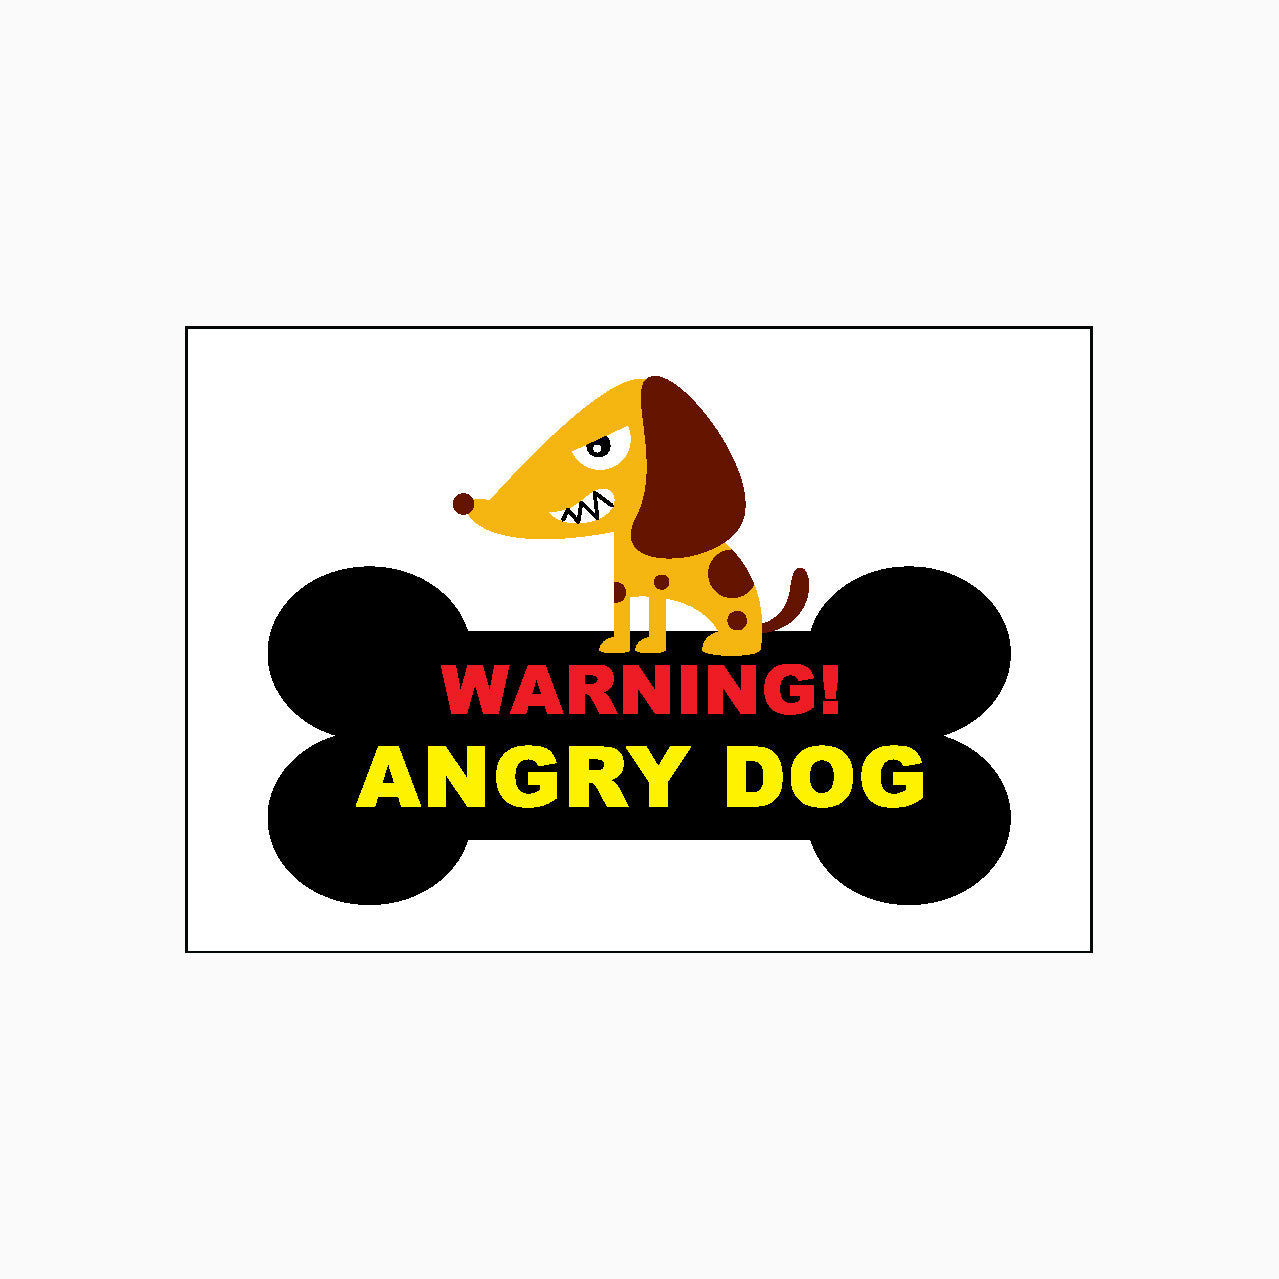 WARNING - ANGRY DOG SIGN